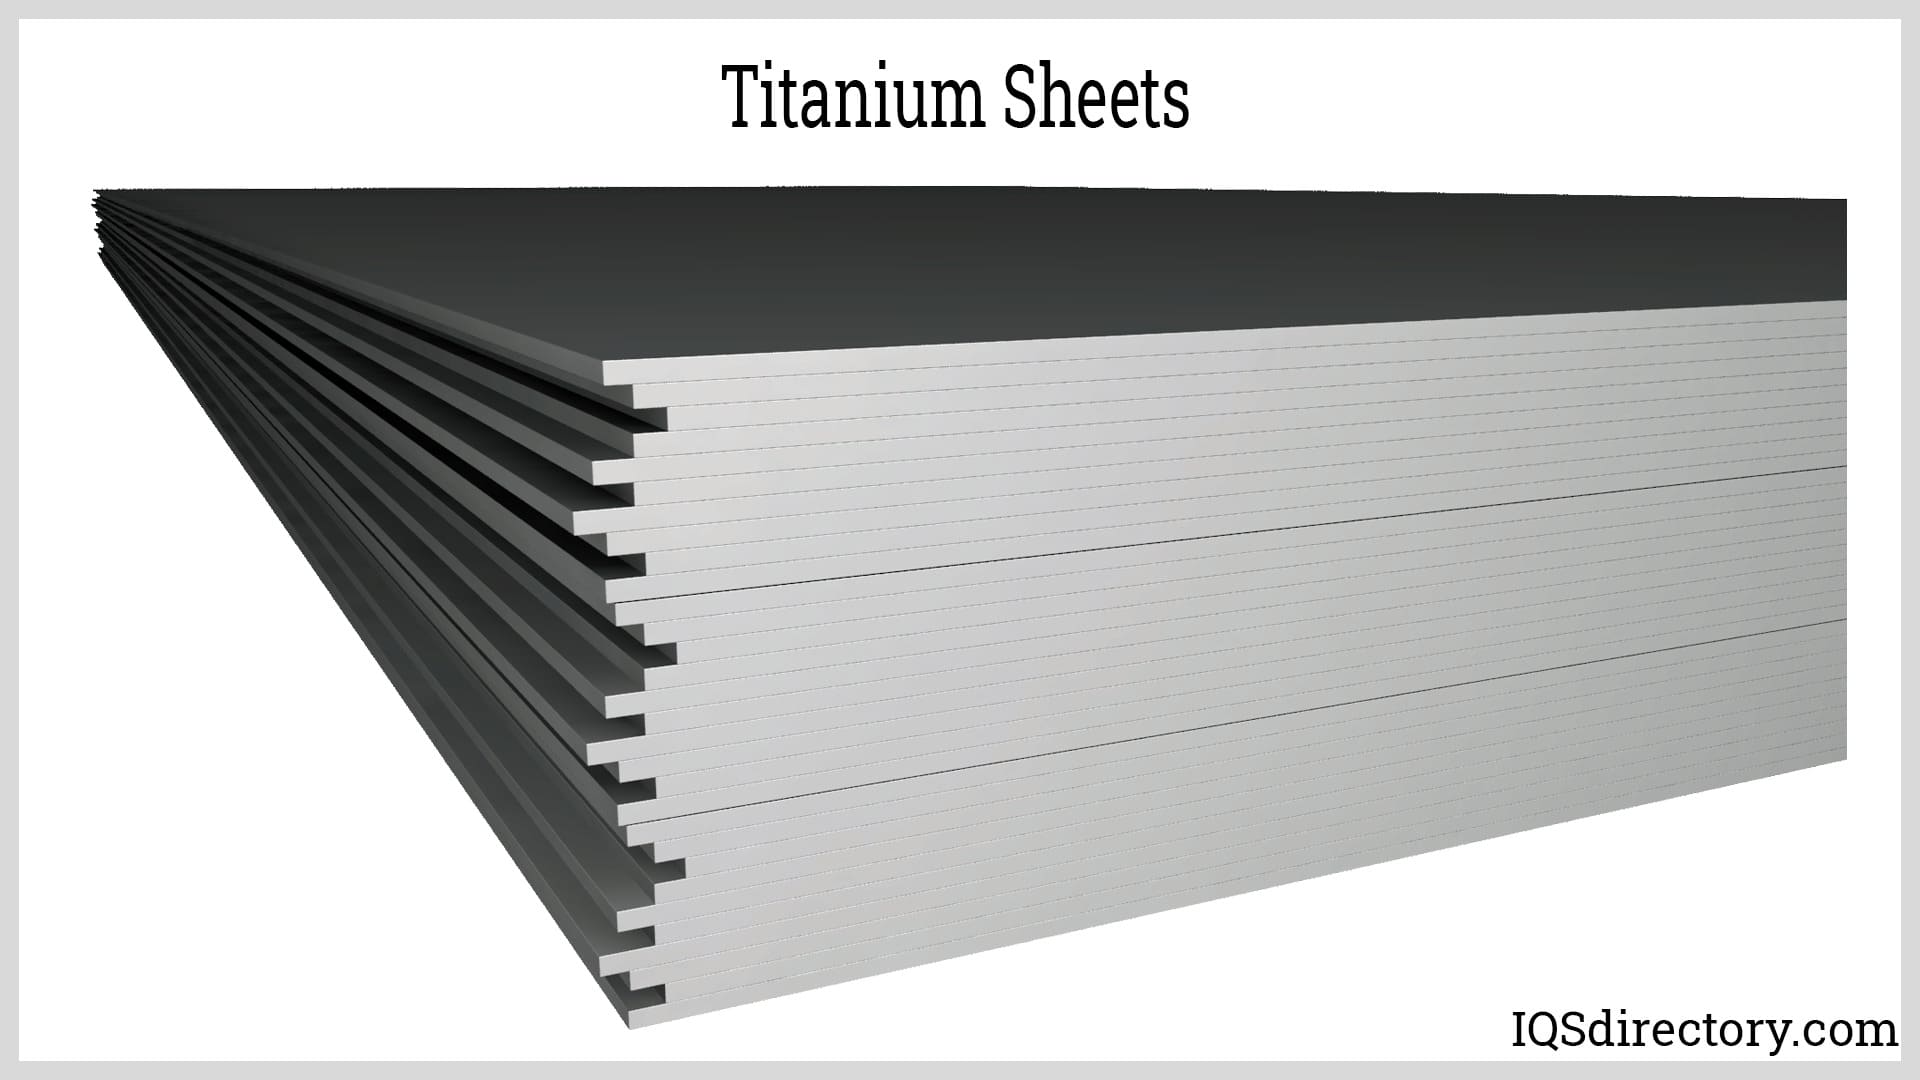 The Environmental Benefits of Using Titanium